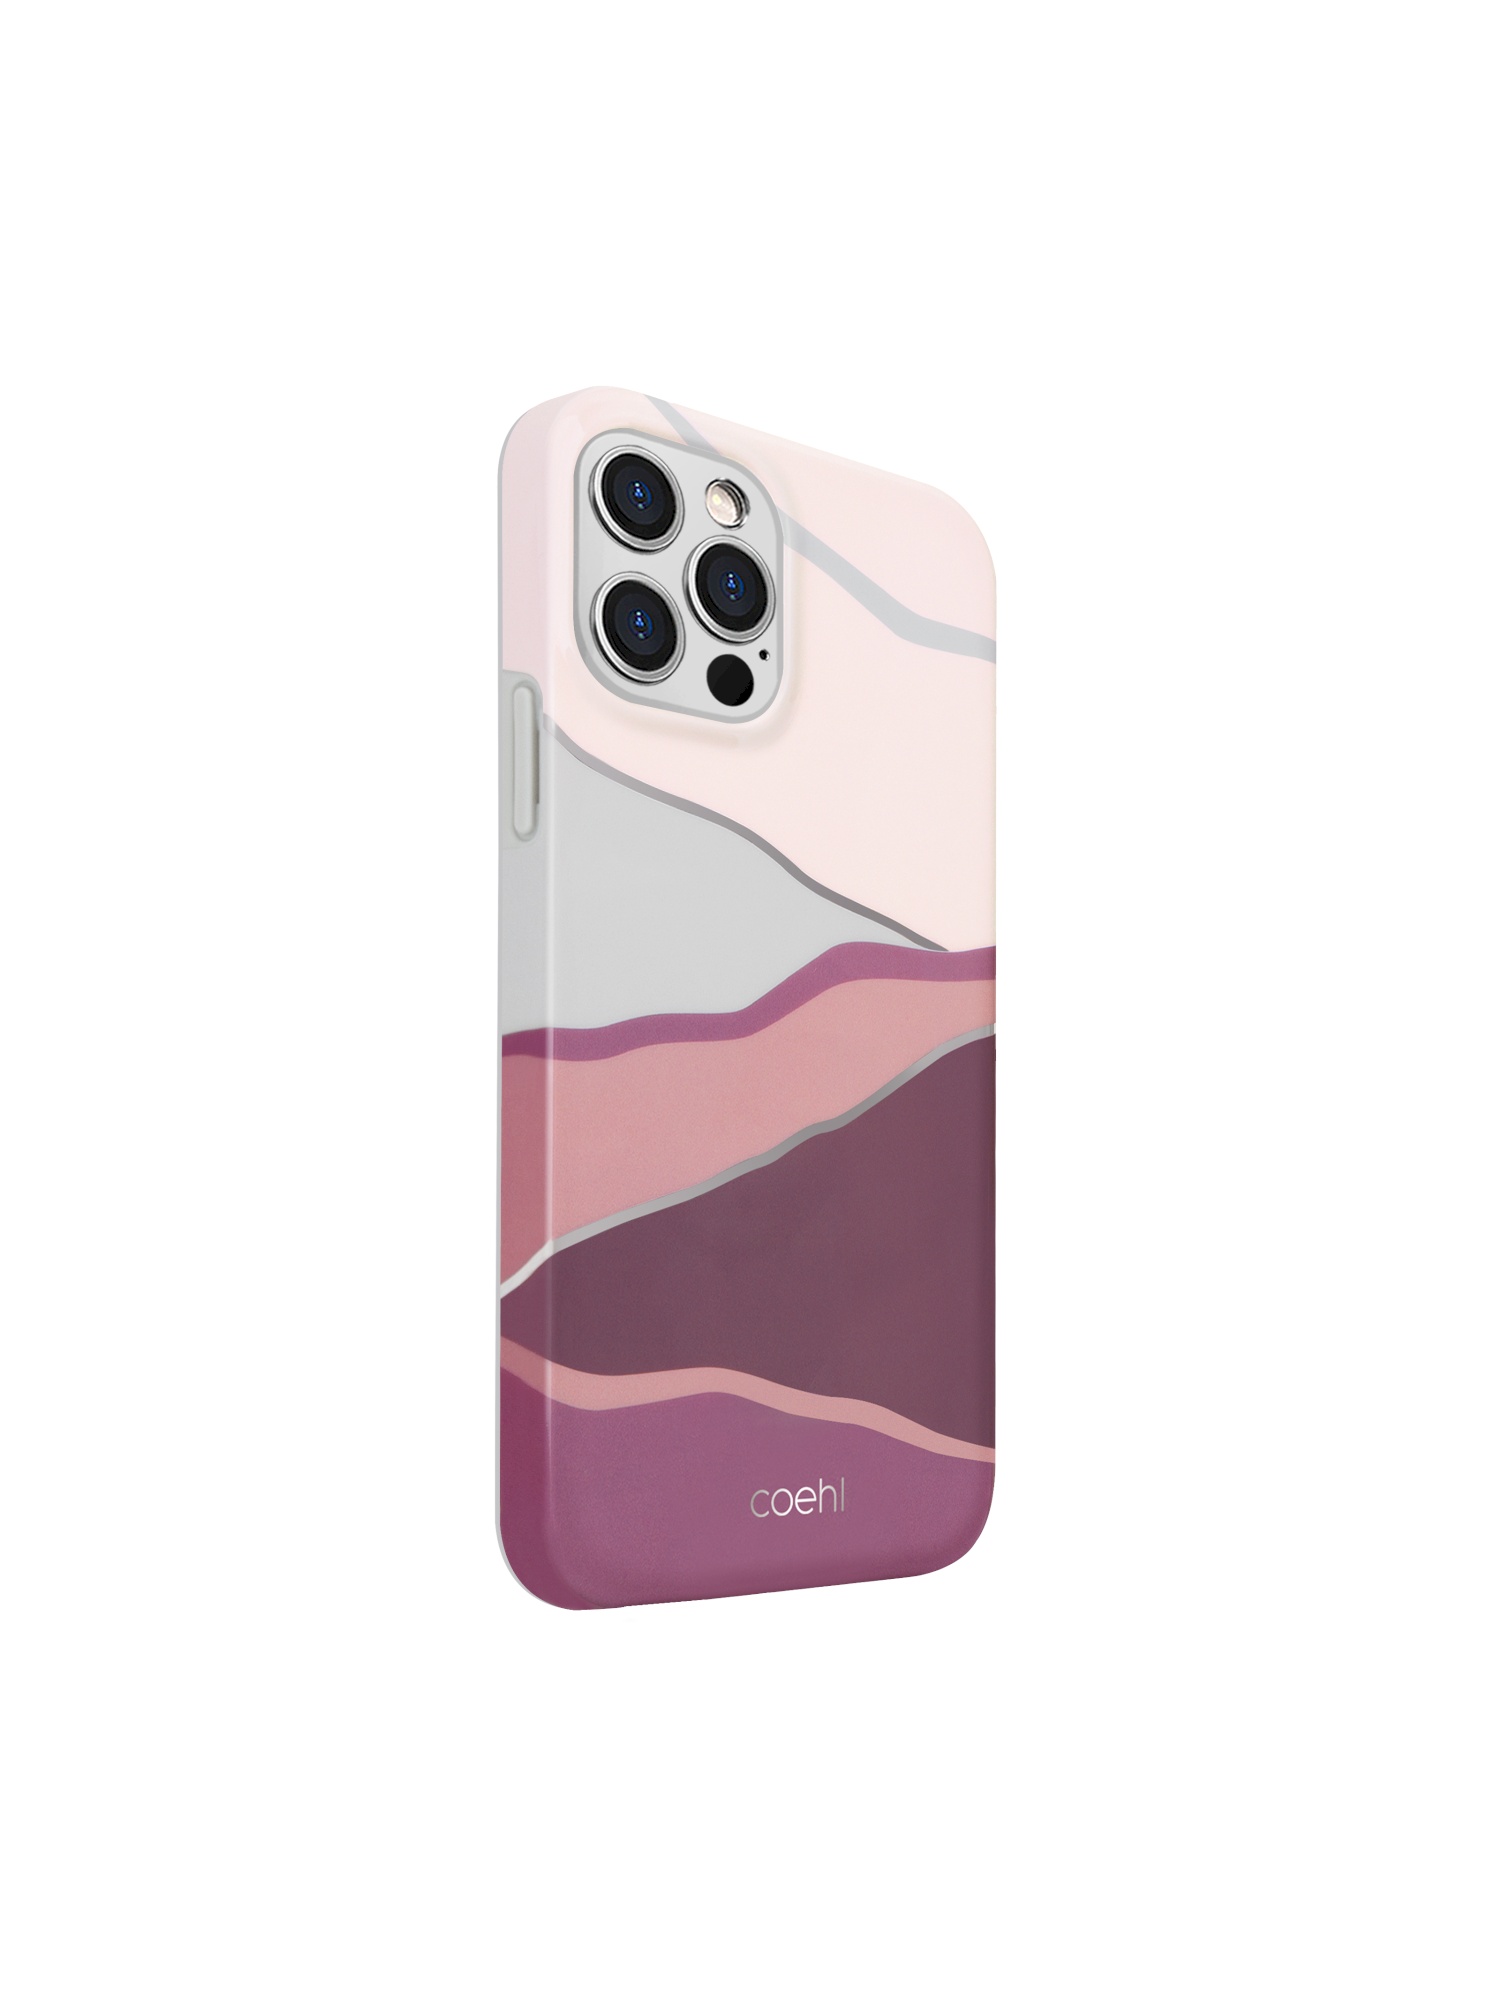 iPhone 12/12 Pro, housse coehl ciel sunset pink, rose